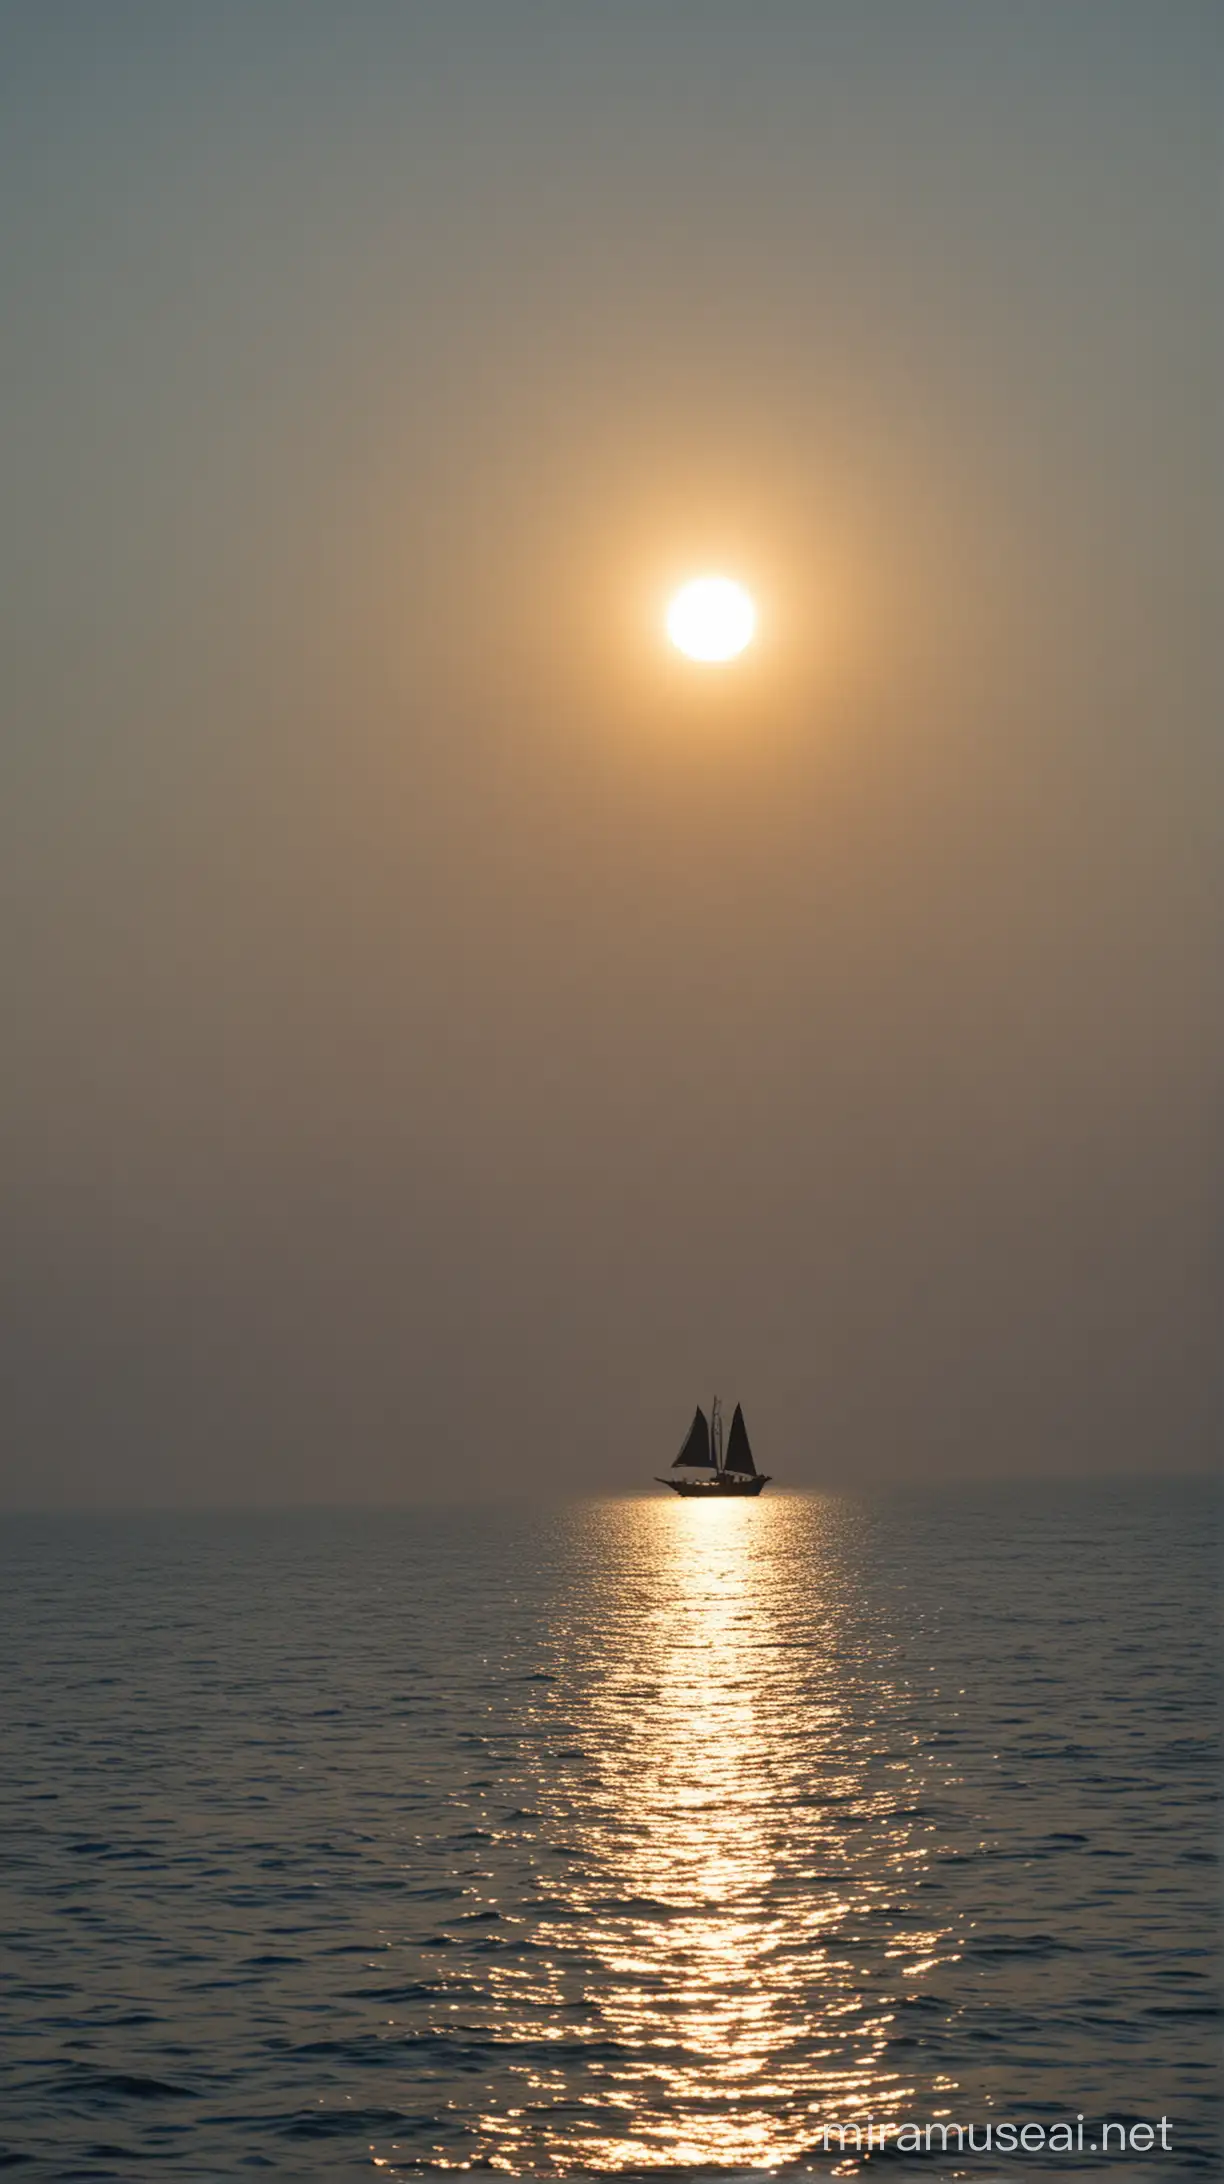 Moken Tribe Members Sailing into Sunset on Blue Sea